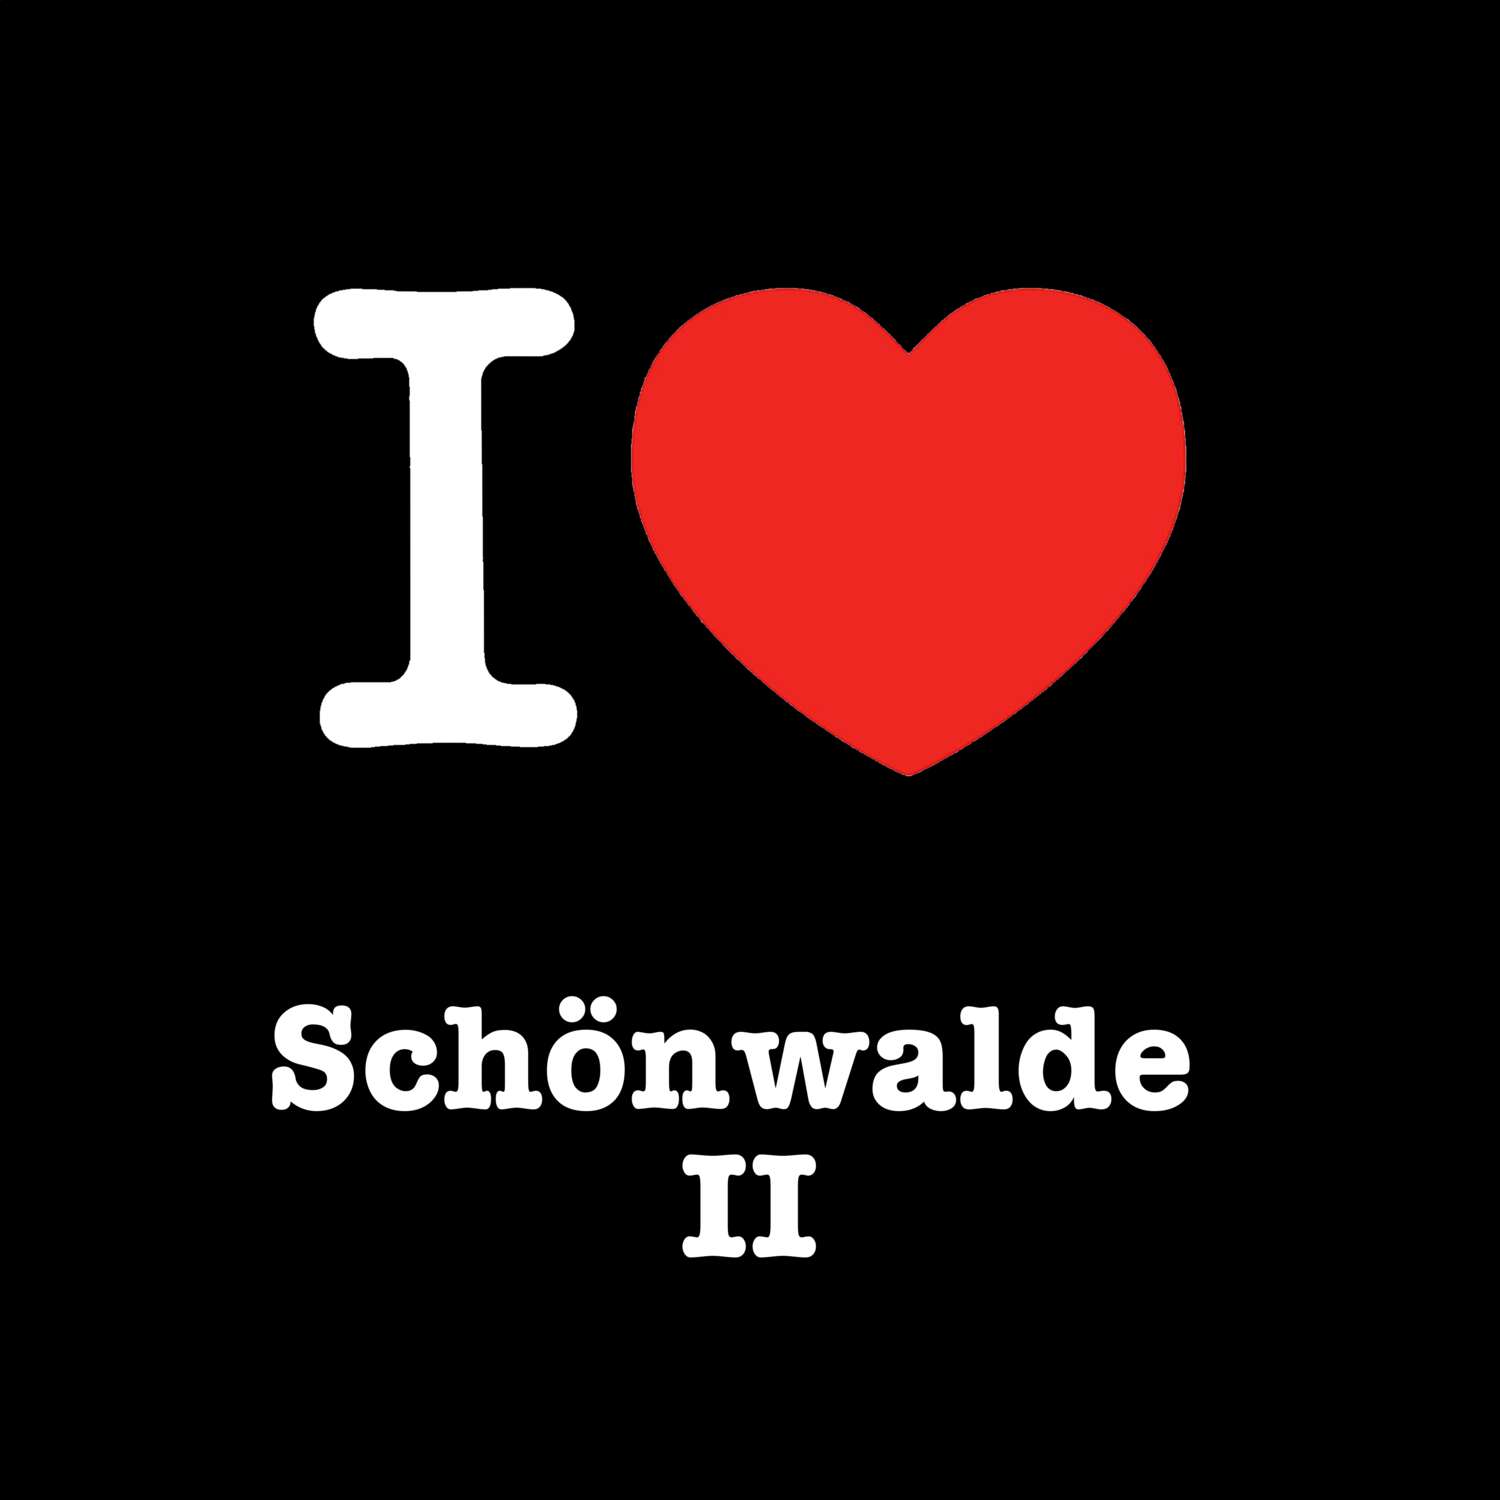 Schönwalde II T-Shirt »I love«